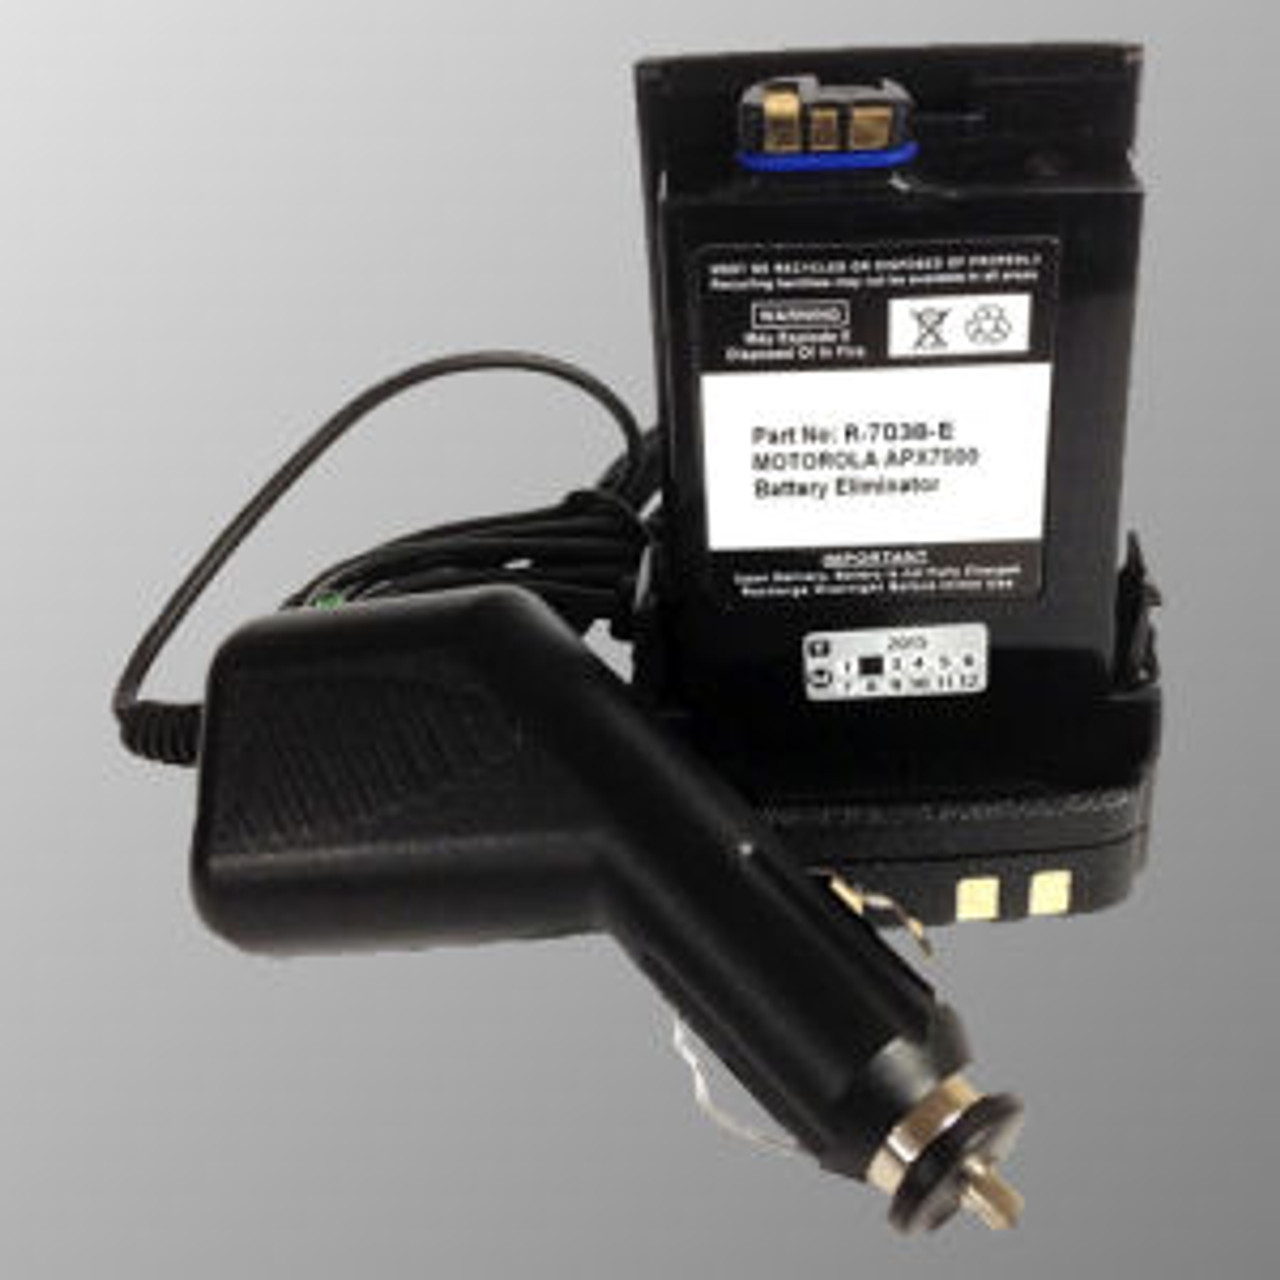 Motorola APX8000 Battery Eliminator - 12VDC Cig Plug